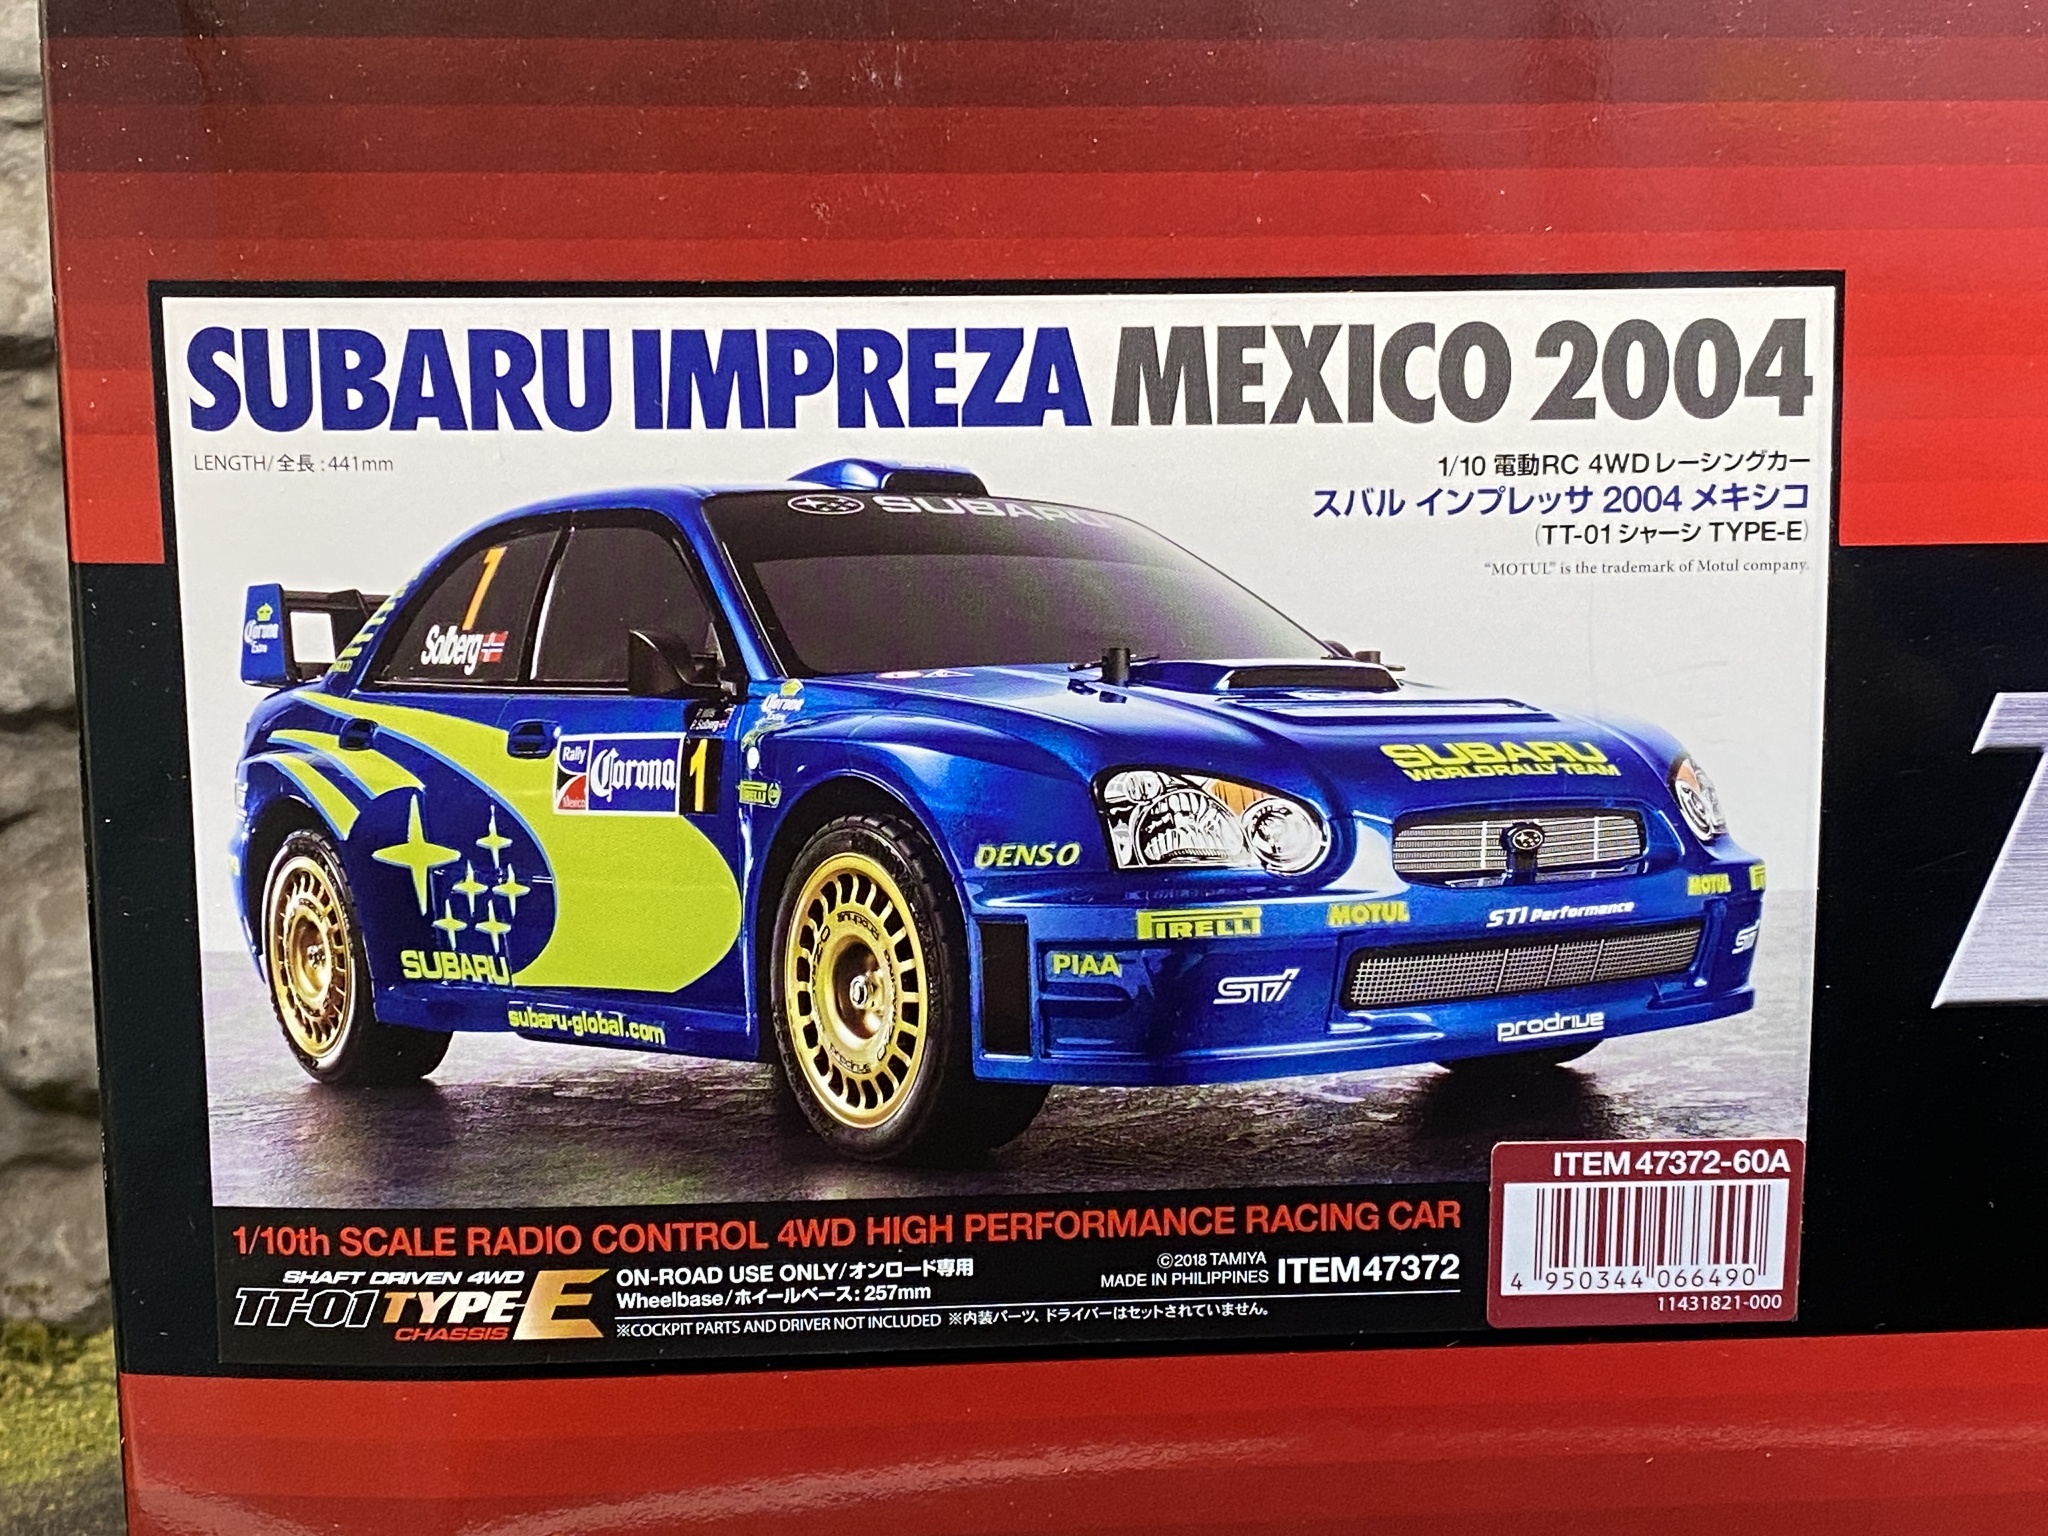 Skala 1/10 Subaru Impreza Mexico 2004 m TT-01 Type E Chassi från Tamiya